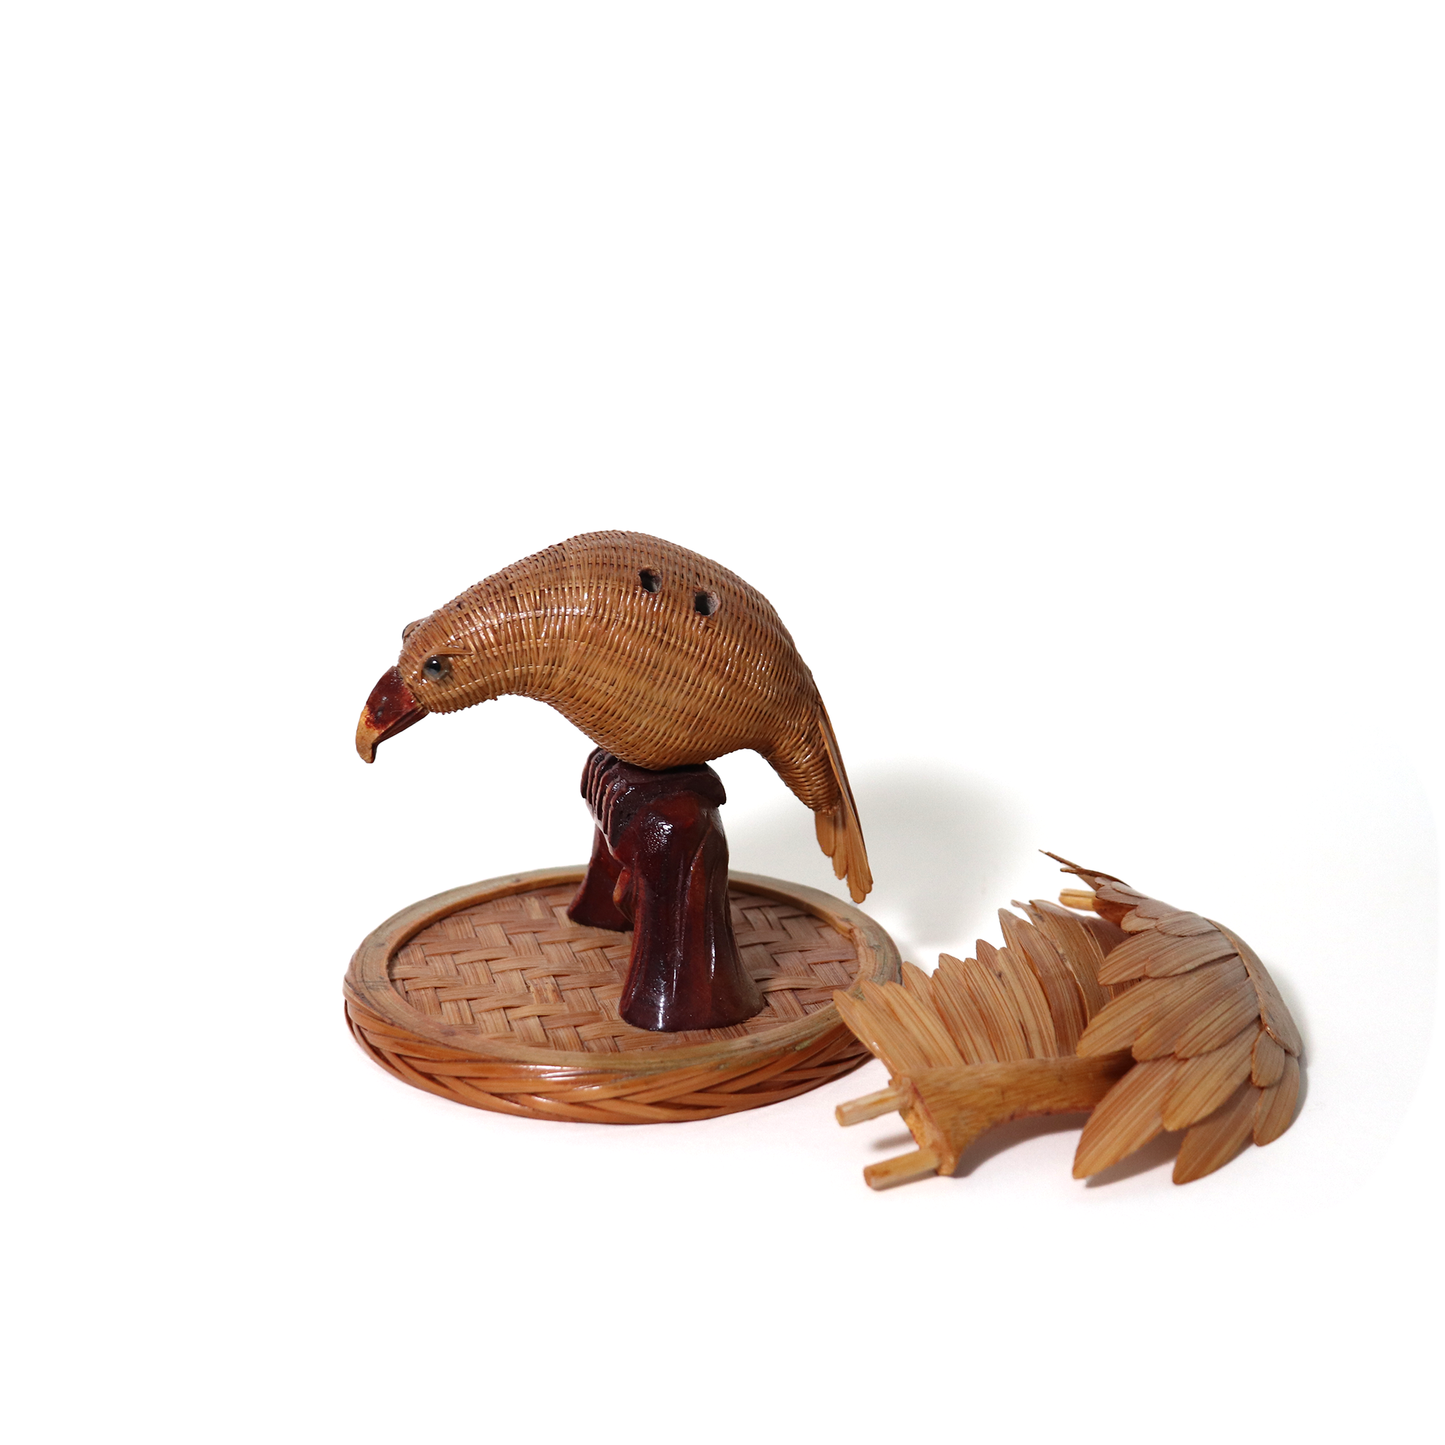 Wicker Bird Figurine